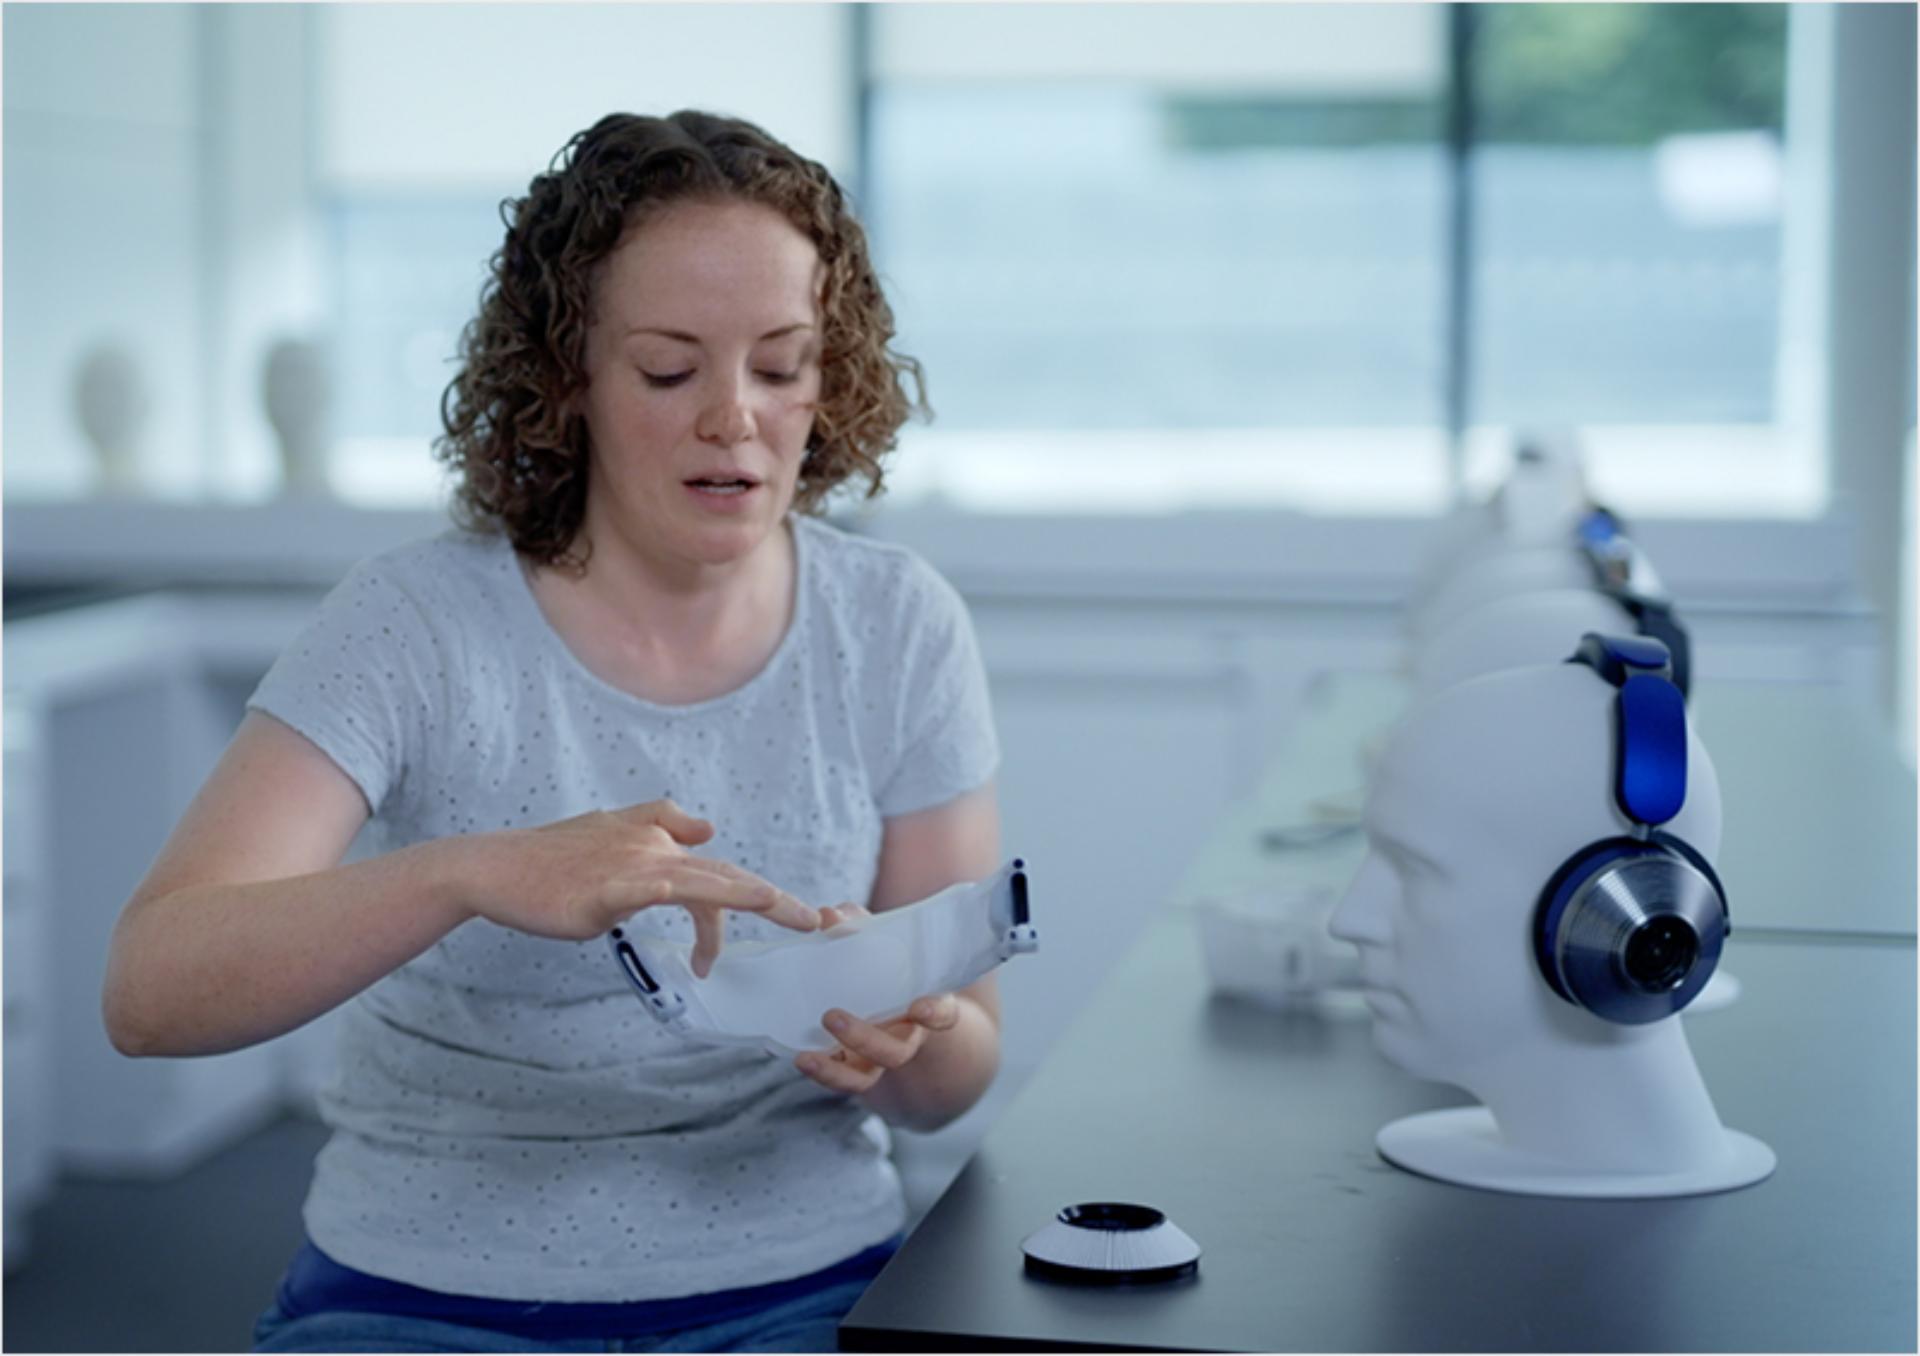 Engineer holds contact-free visor in her hands in front of mannequin wearing full headphones.